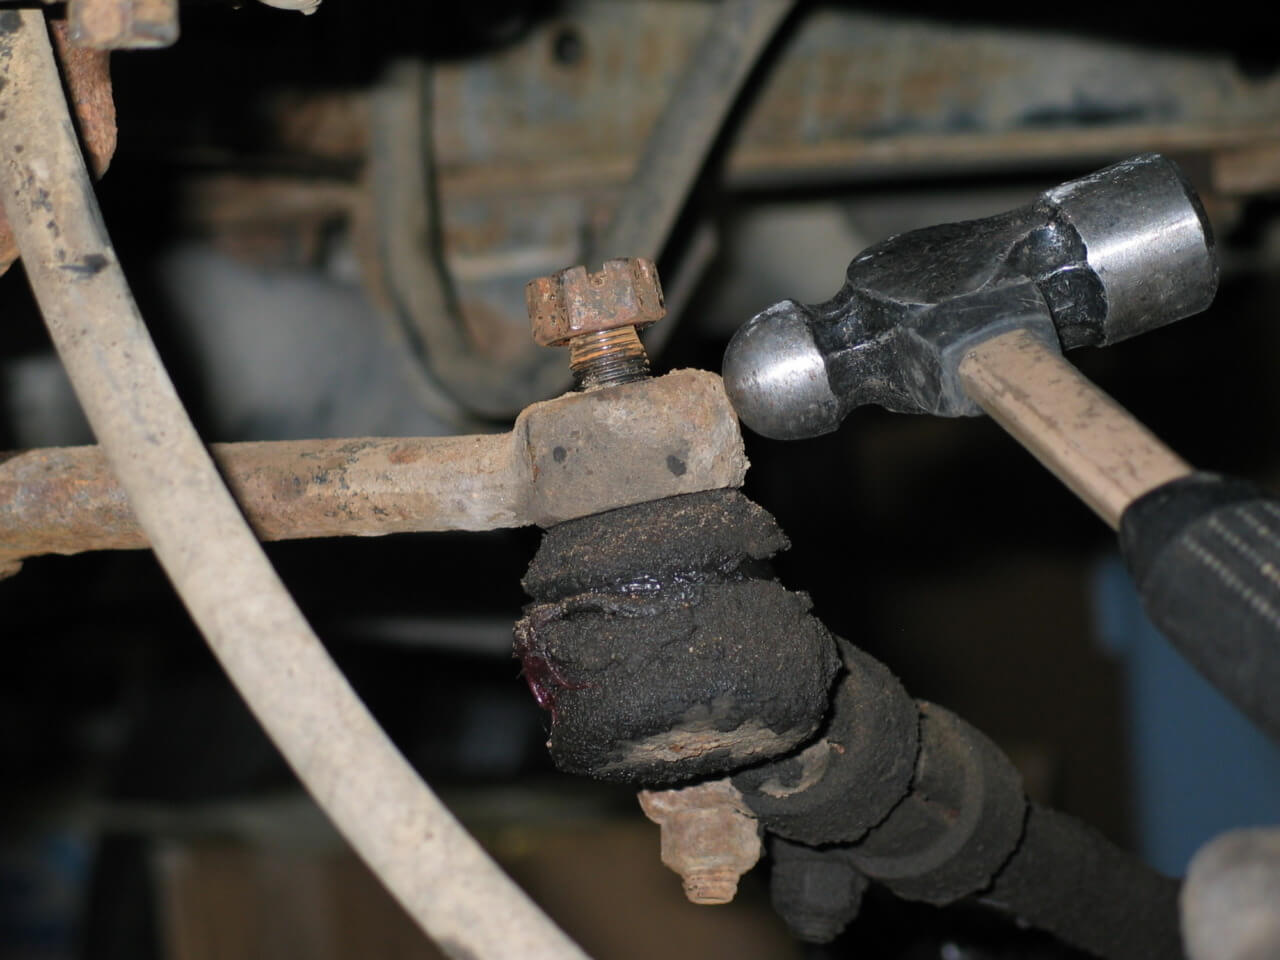 03 4x4 Specialty Repair Tools Ball Peen Hammer Tie Rod End